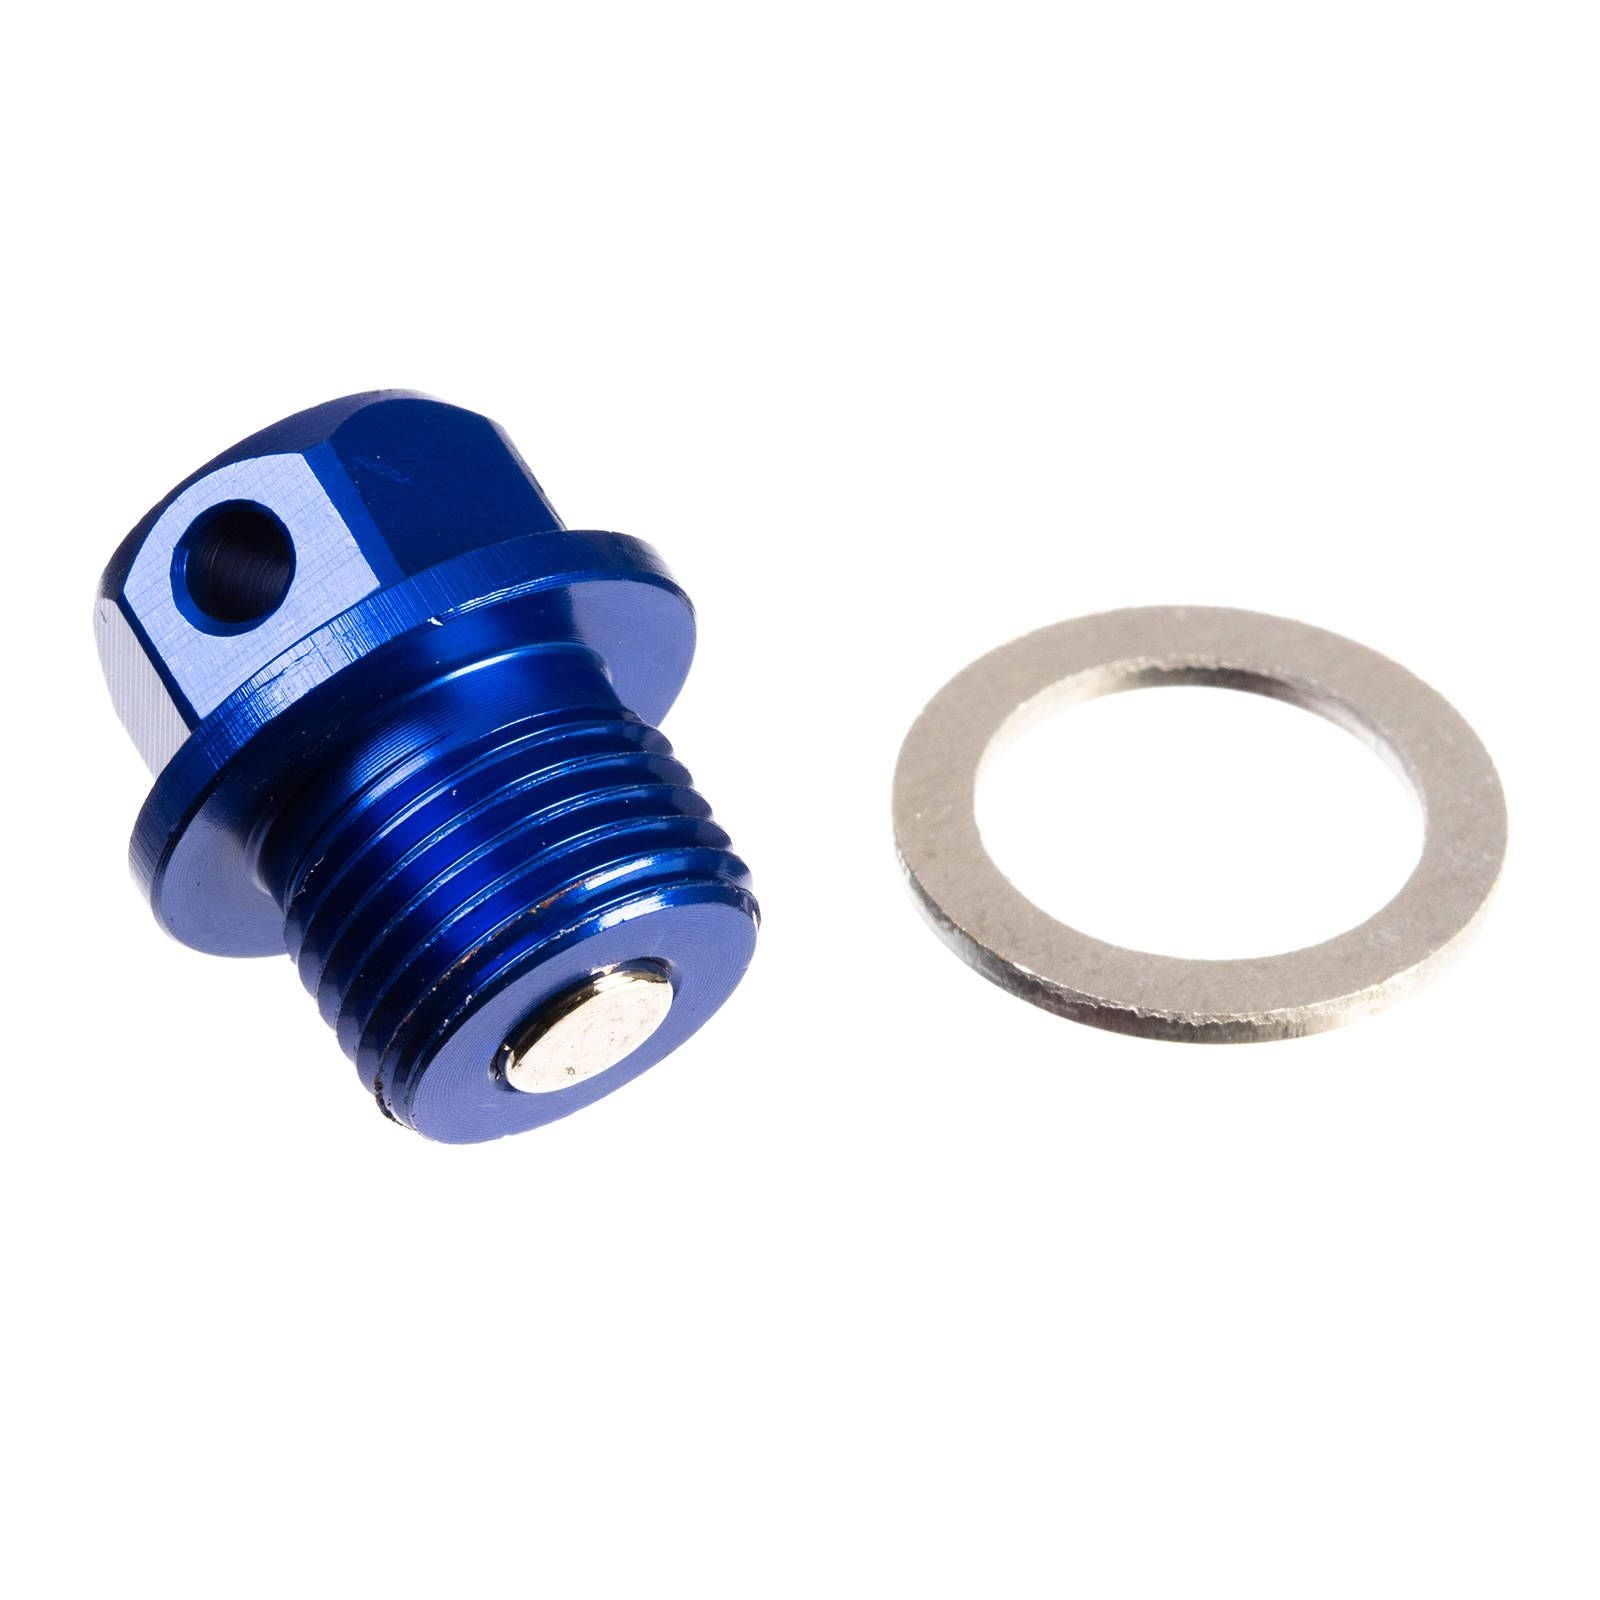 New WHITES Magnetic Sump Plug M14 x 10 x 1.25 - Blue #WPMDP1410125B